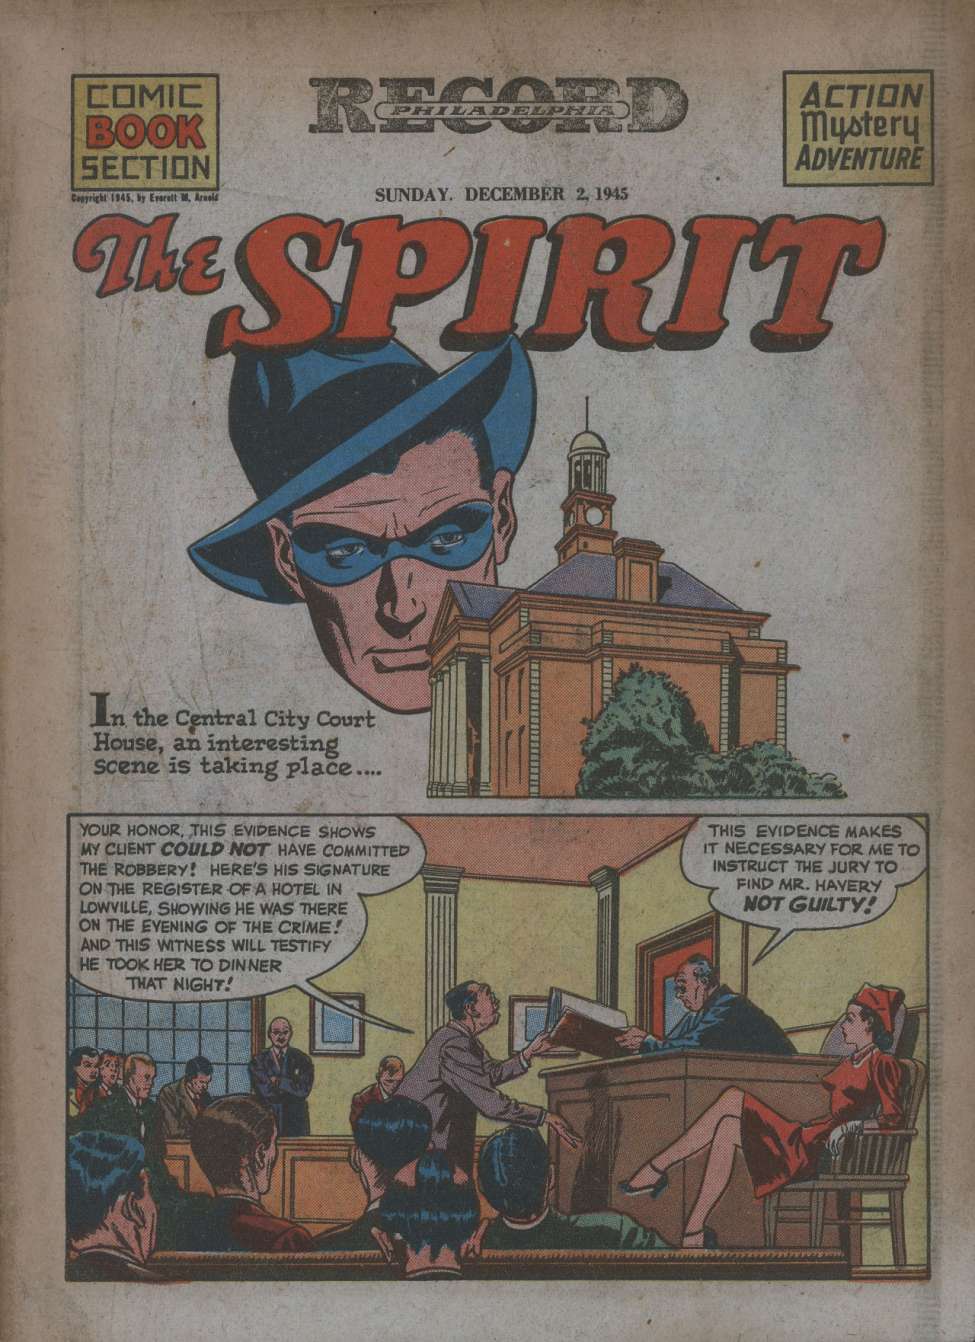 Comic Book Cover For The Spirit (1945-12-02) - Philadelphia Record